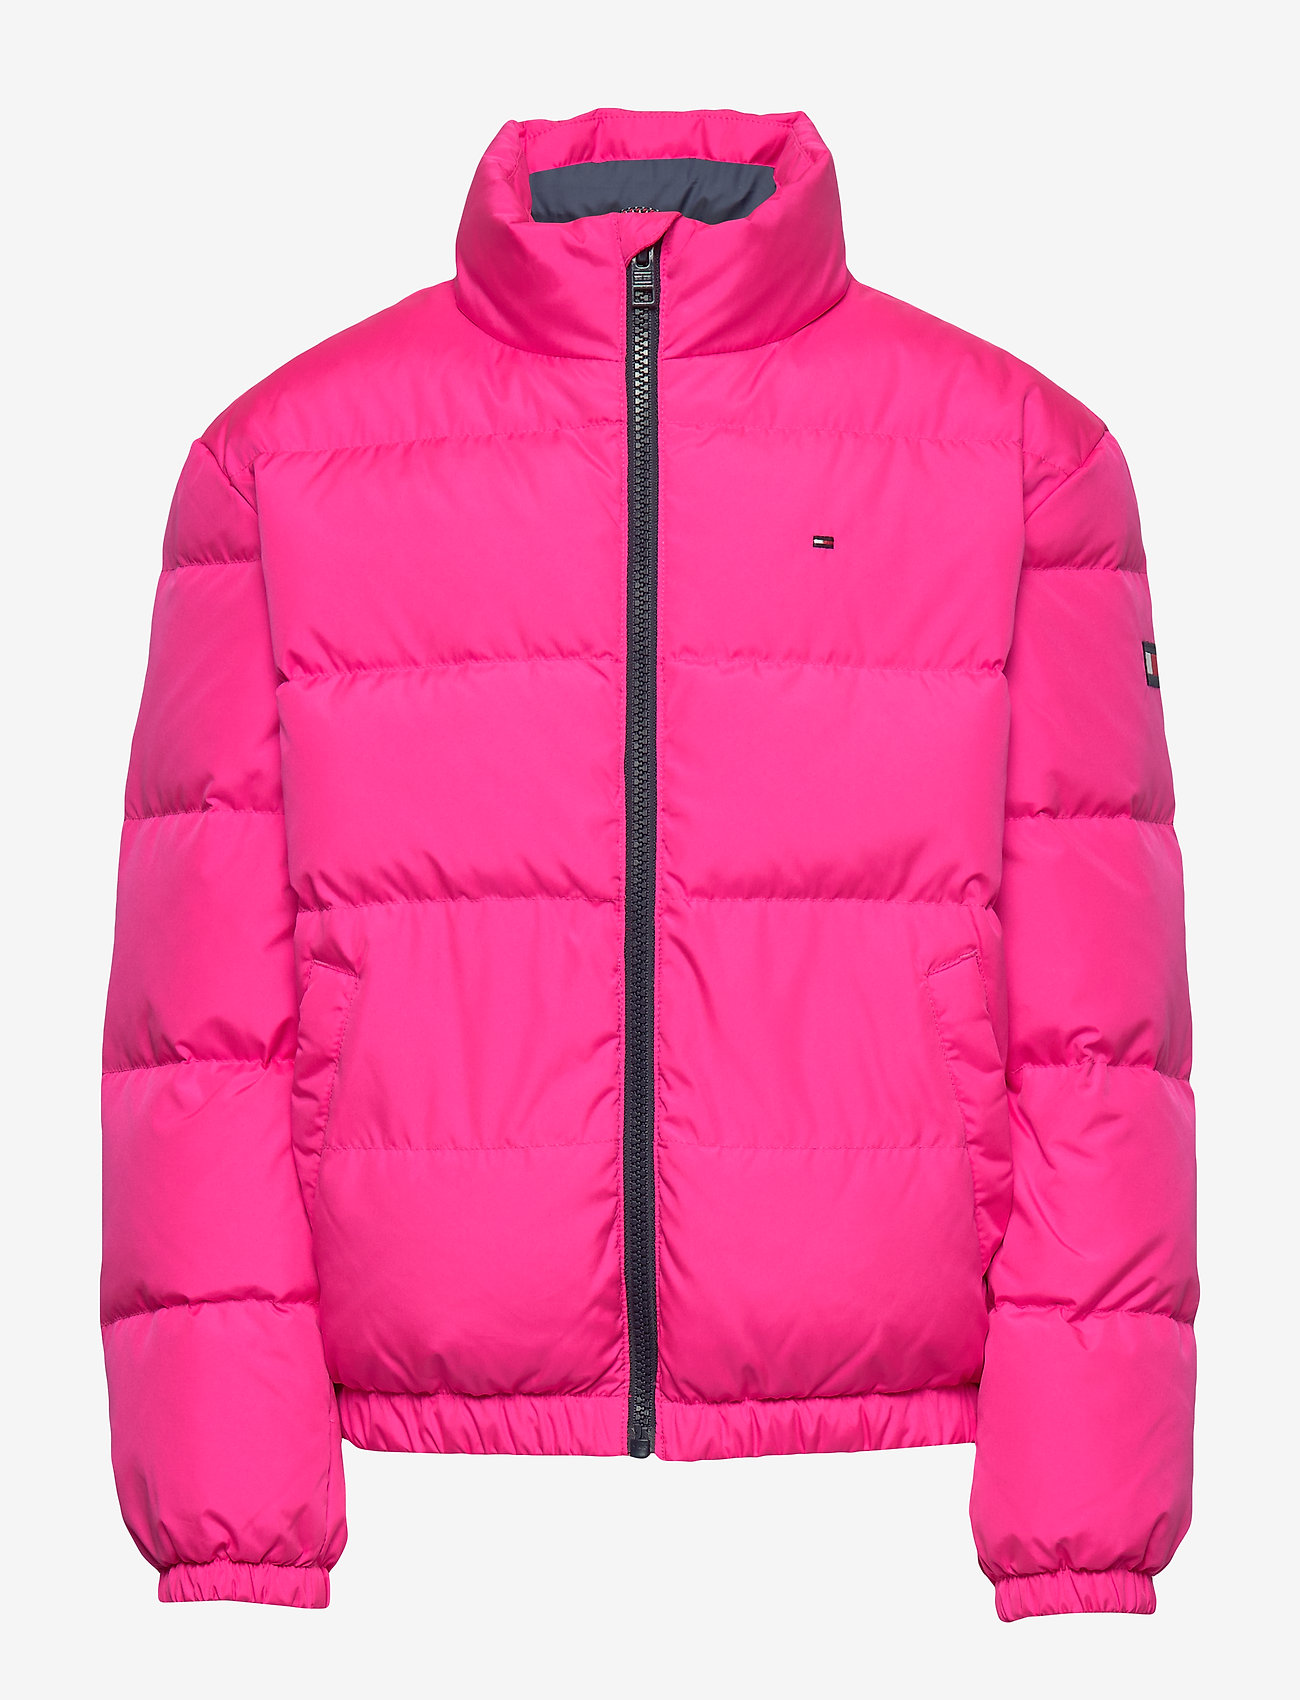 tommy hilfiger pink puffer jacket